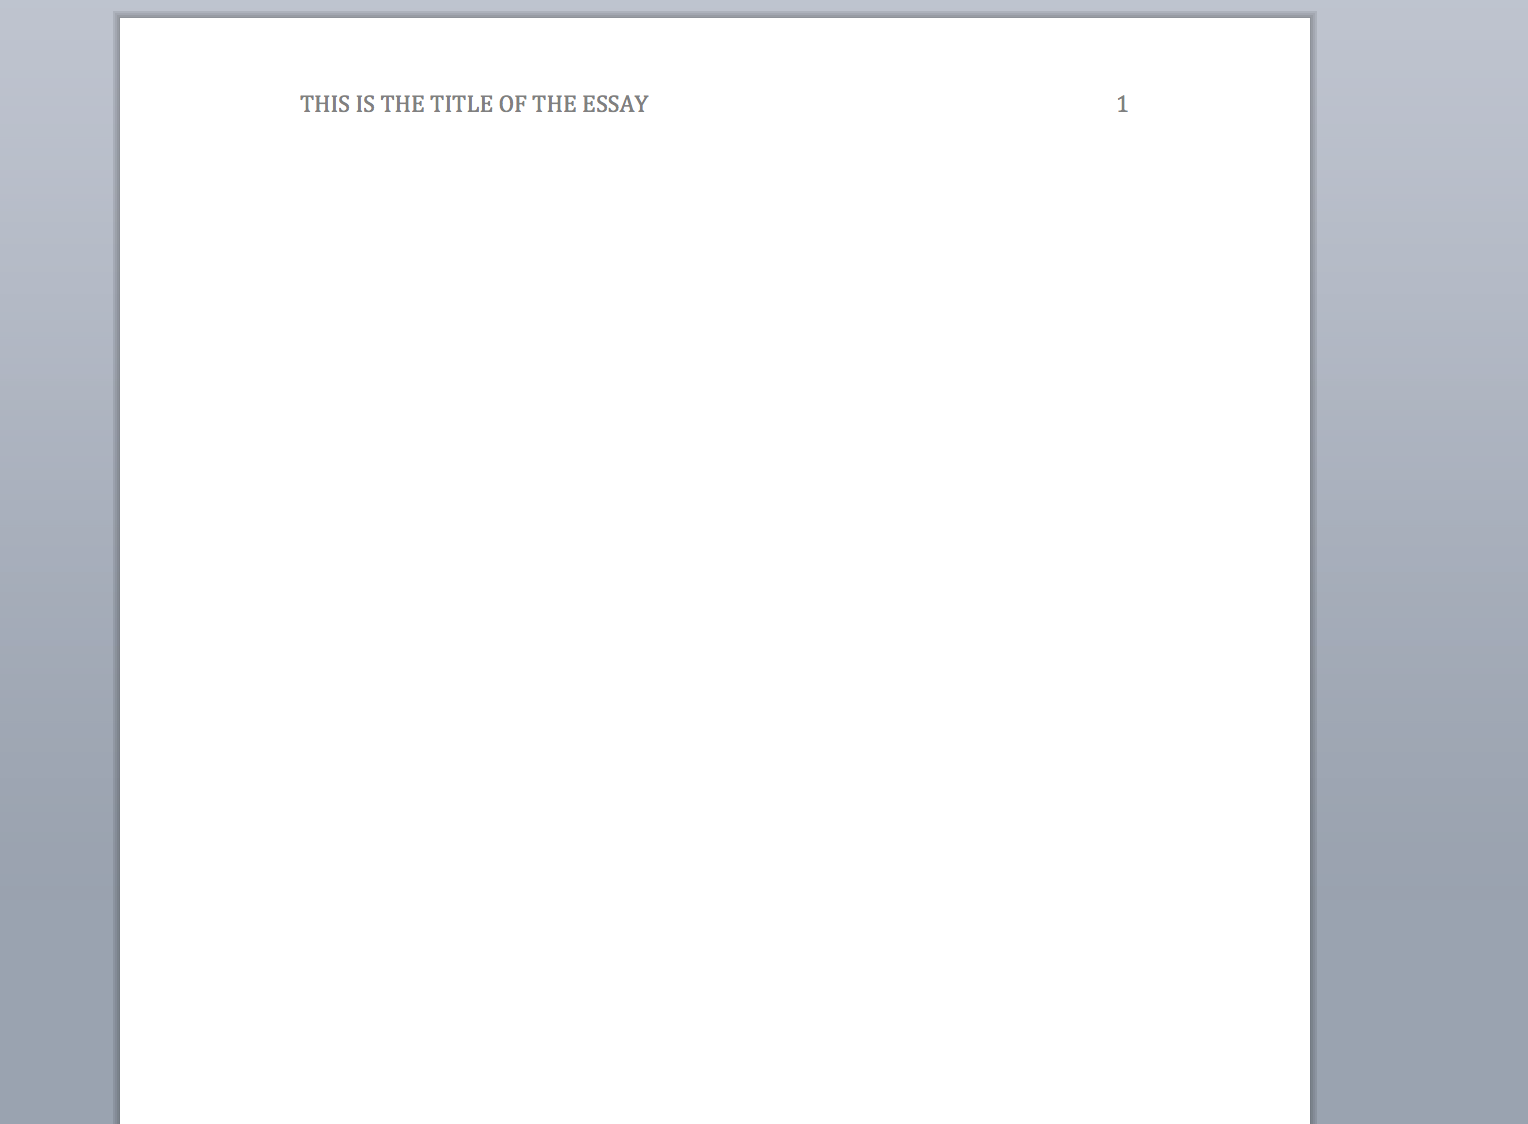 writing a proper essay